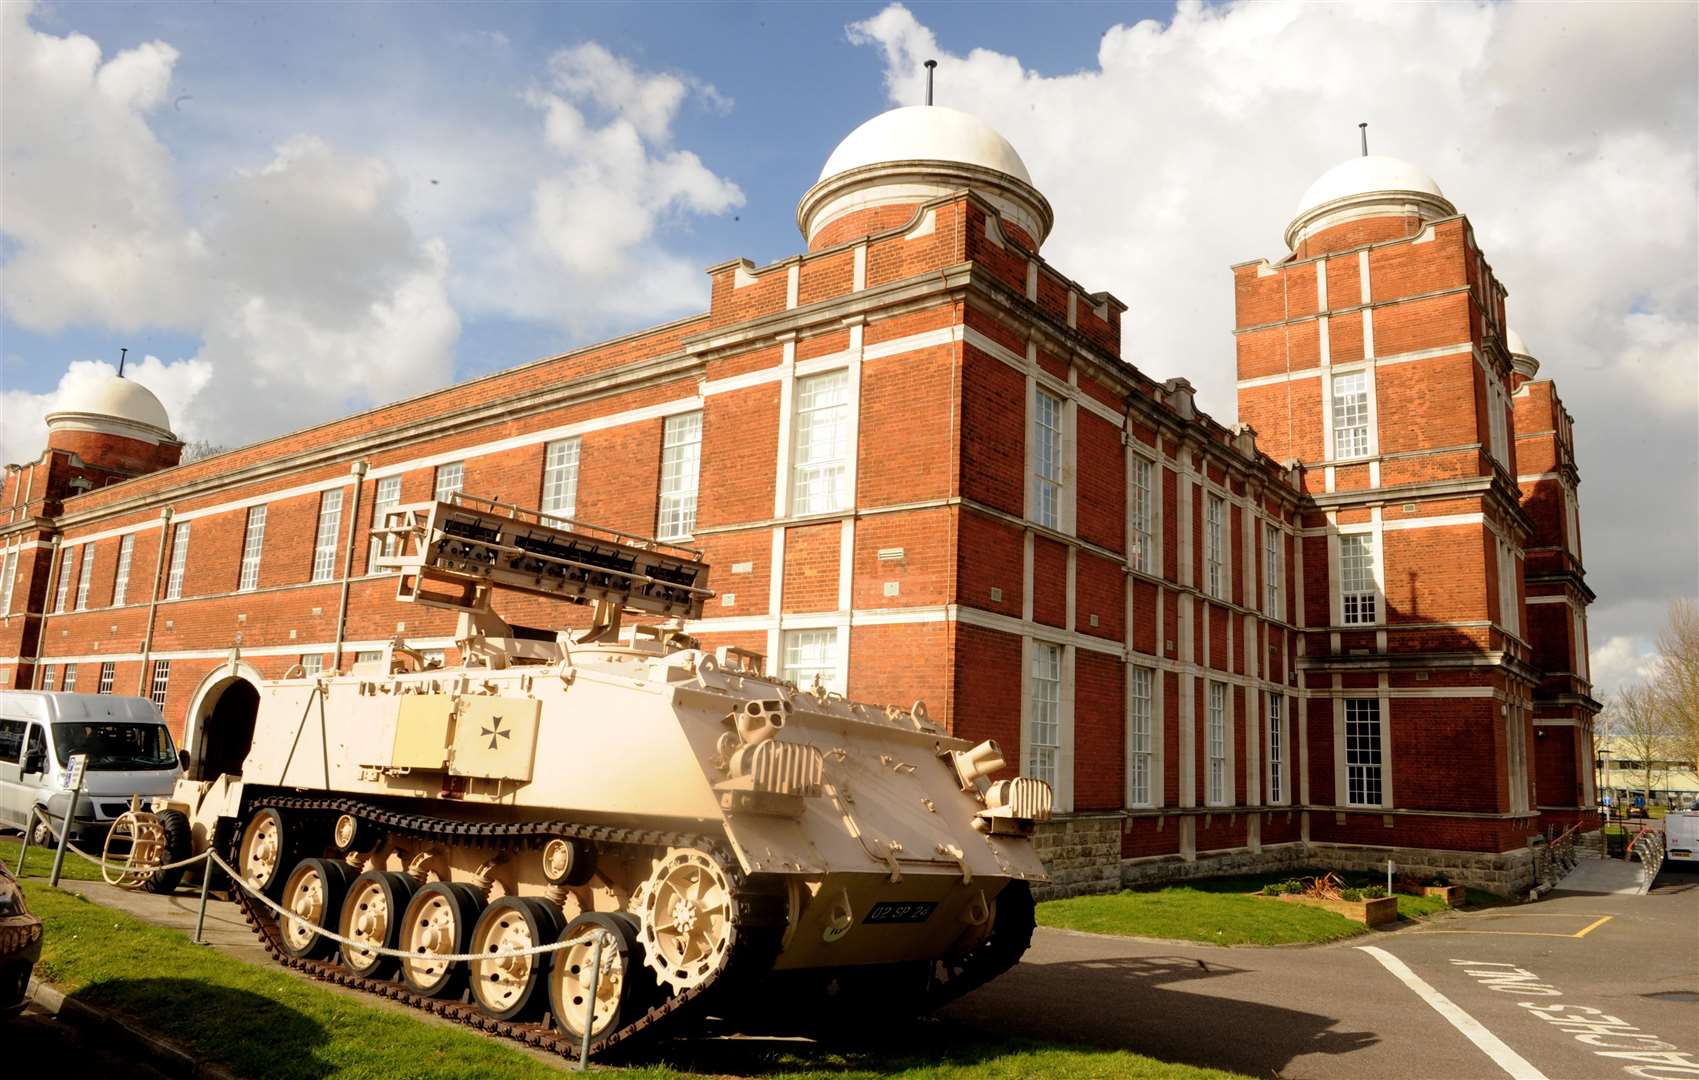 Royal Engineers Museum in Gillingham Picture: Steve Crispe